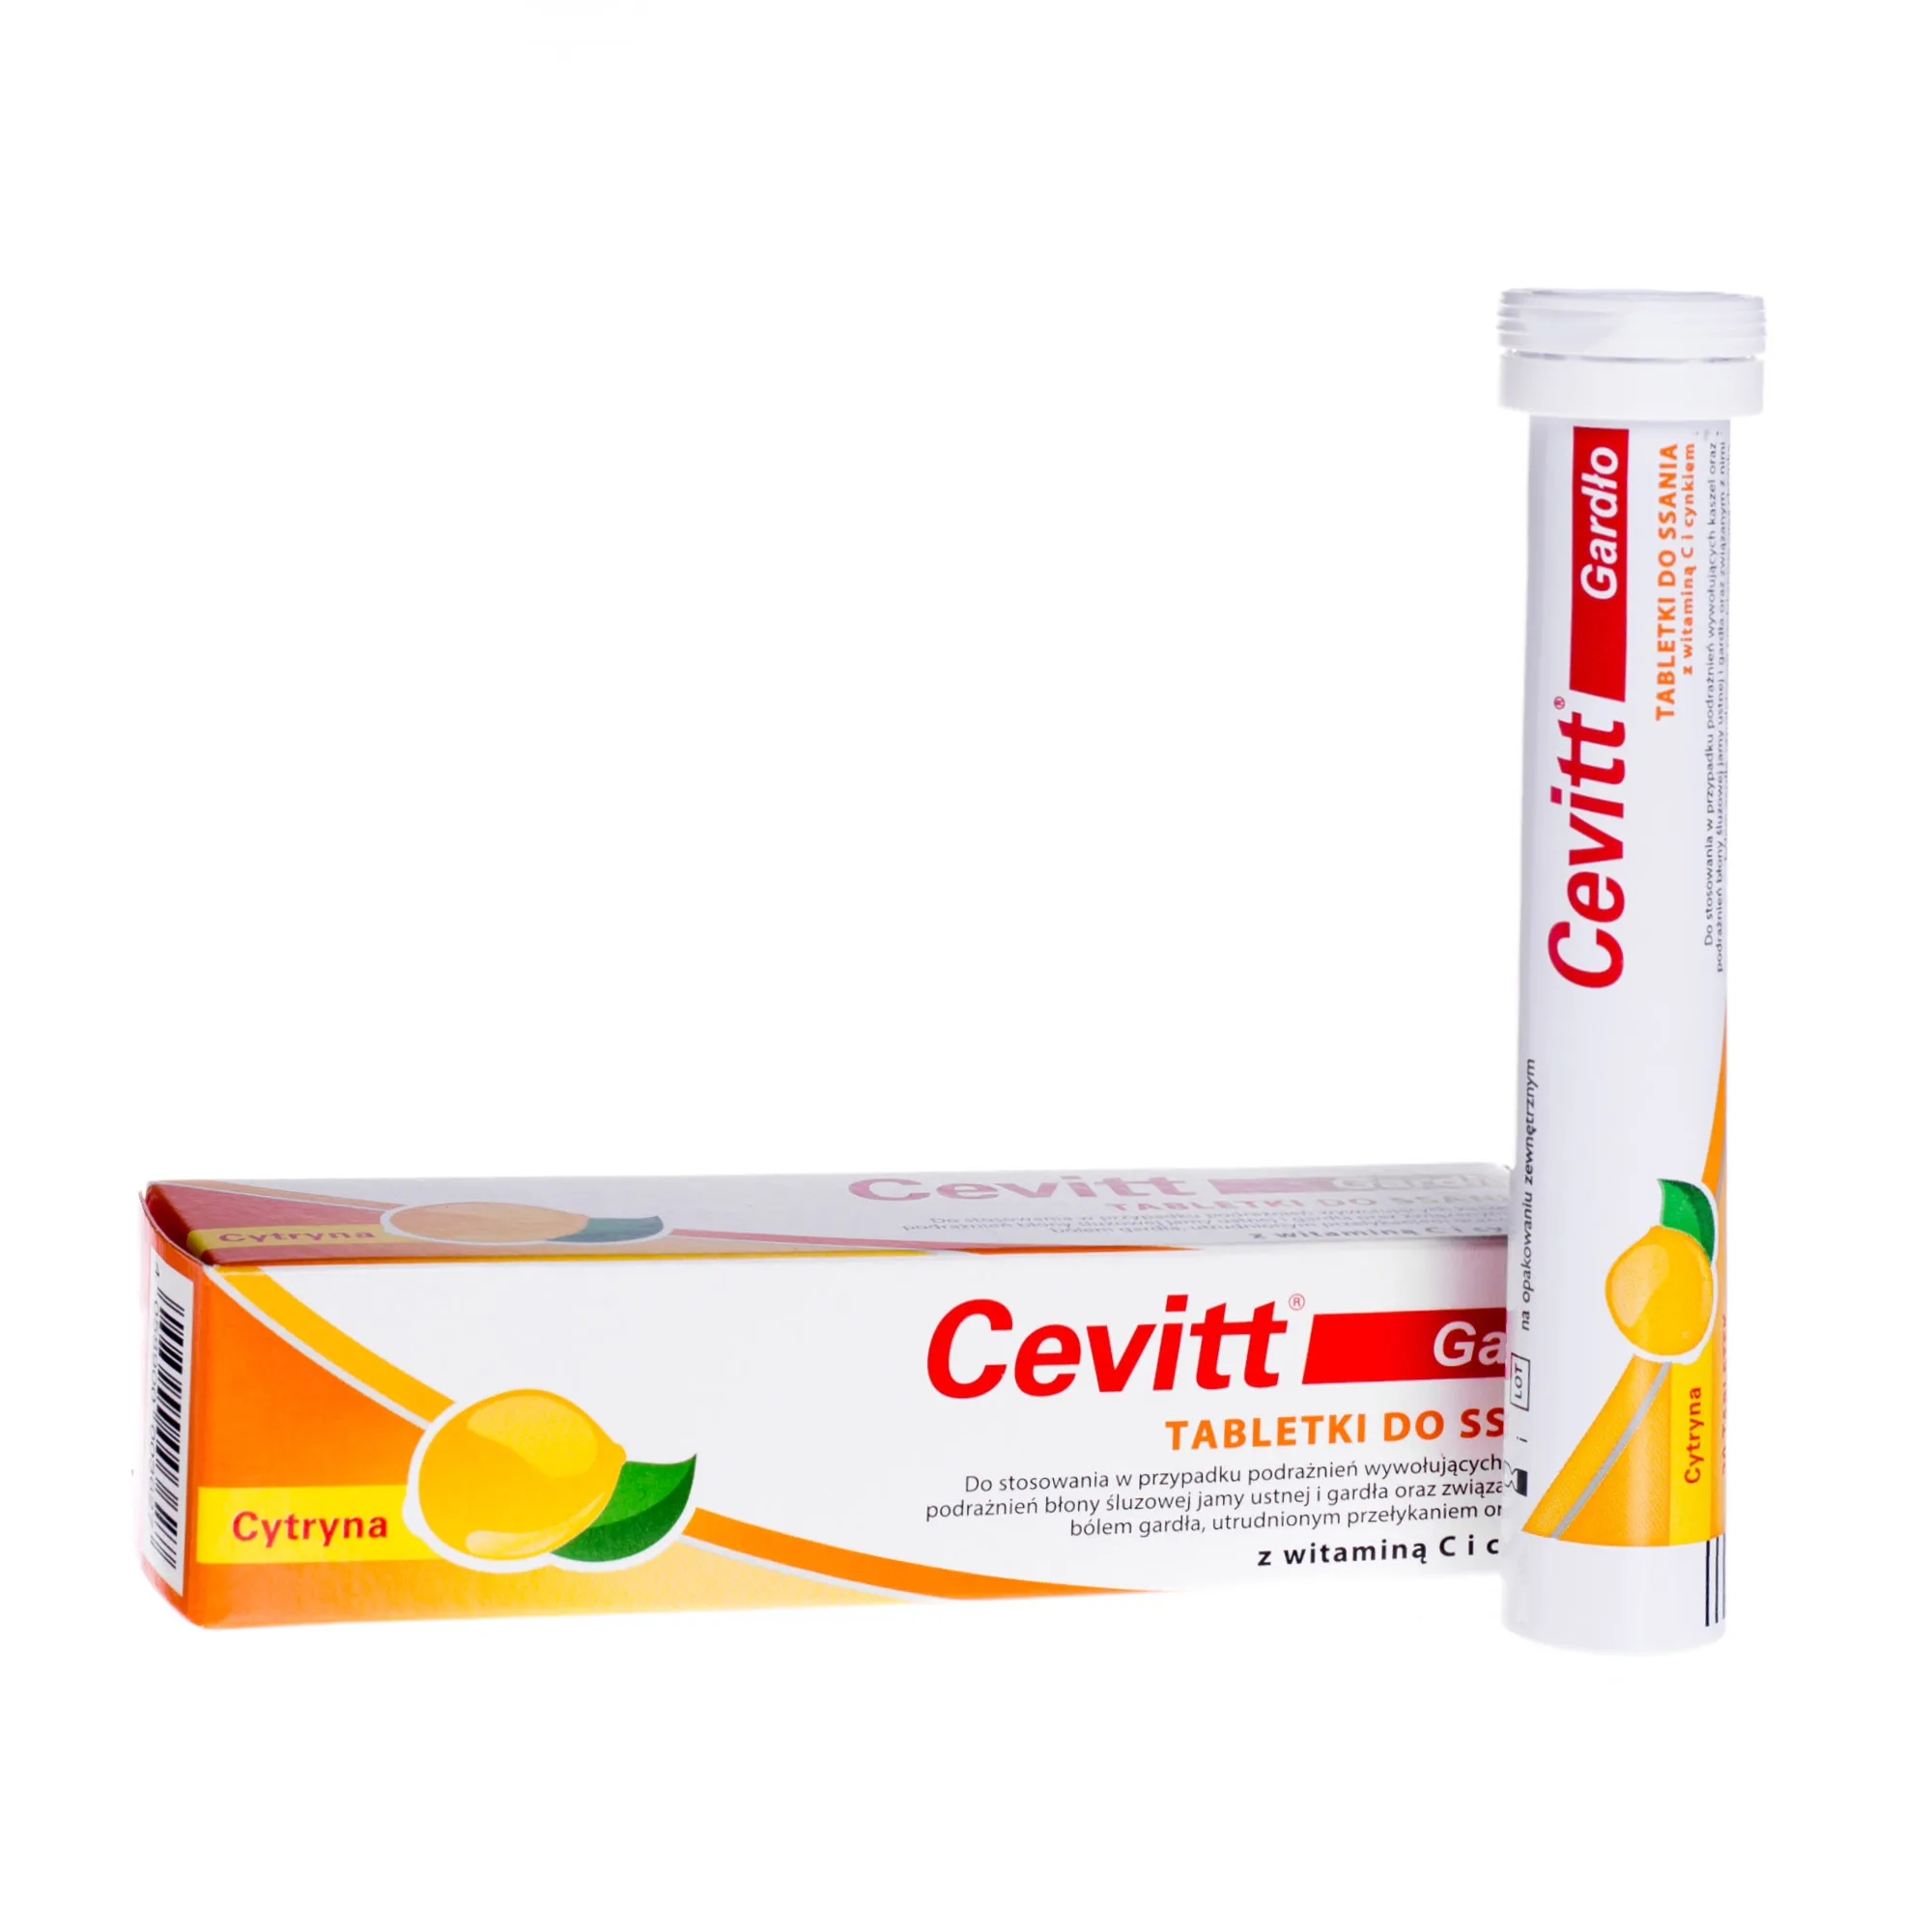 Cevitt Gardło, tabletki do ssania, smak cytrynowy, 20 tabletek